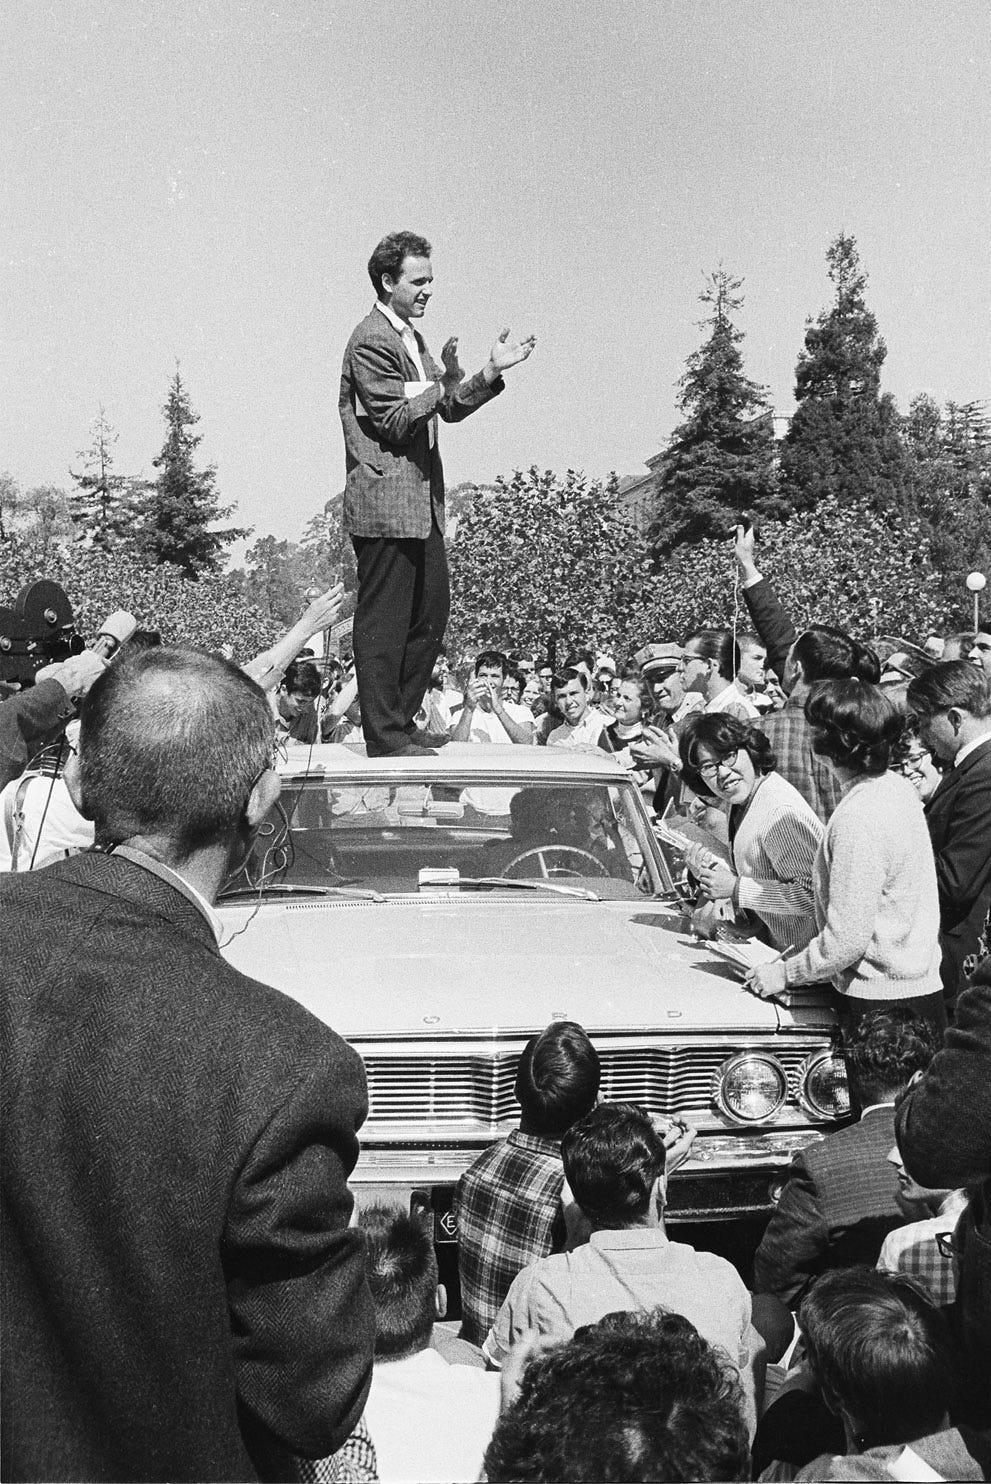 These radical photos show the original Berkeley free speech movement in